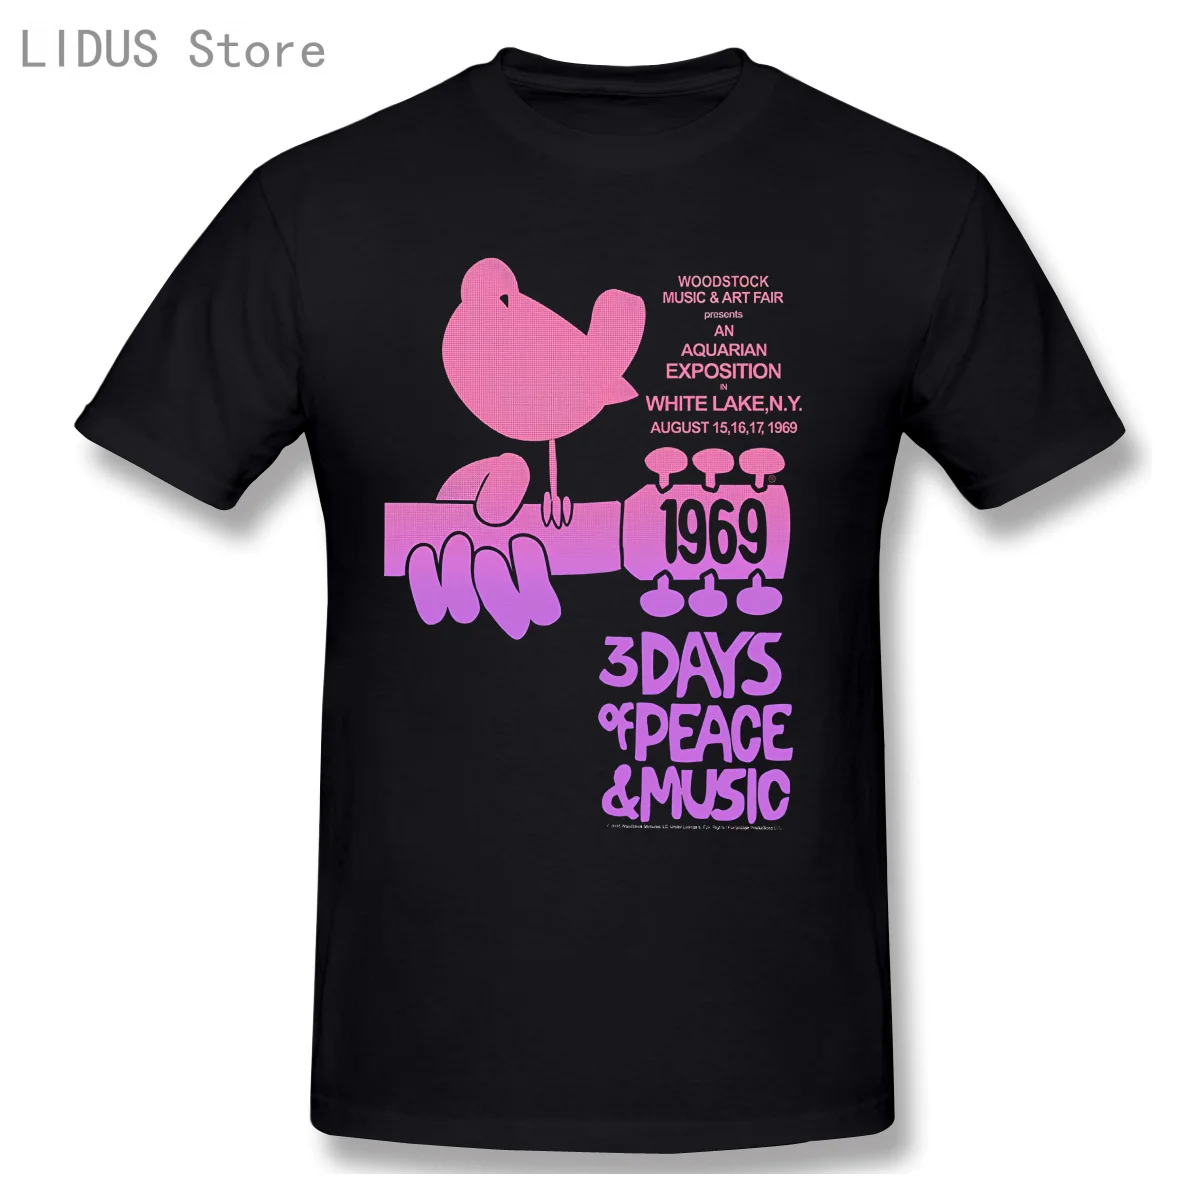 

LIDUS Woodstock - Pink Aquarian Shirt Short Sleeved TShirt Fashion Cotton T-shirt Tee Shirts Tops